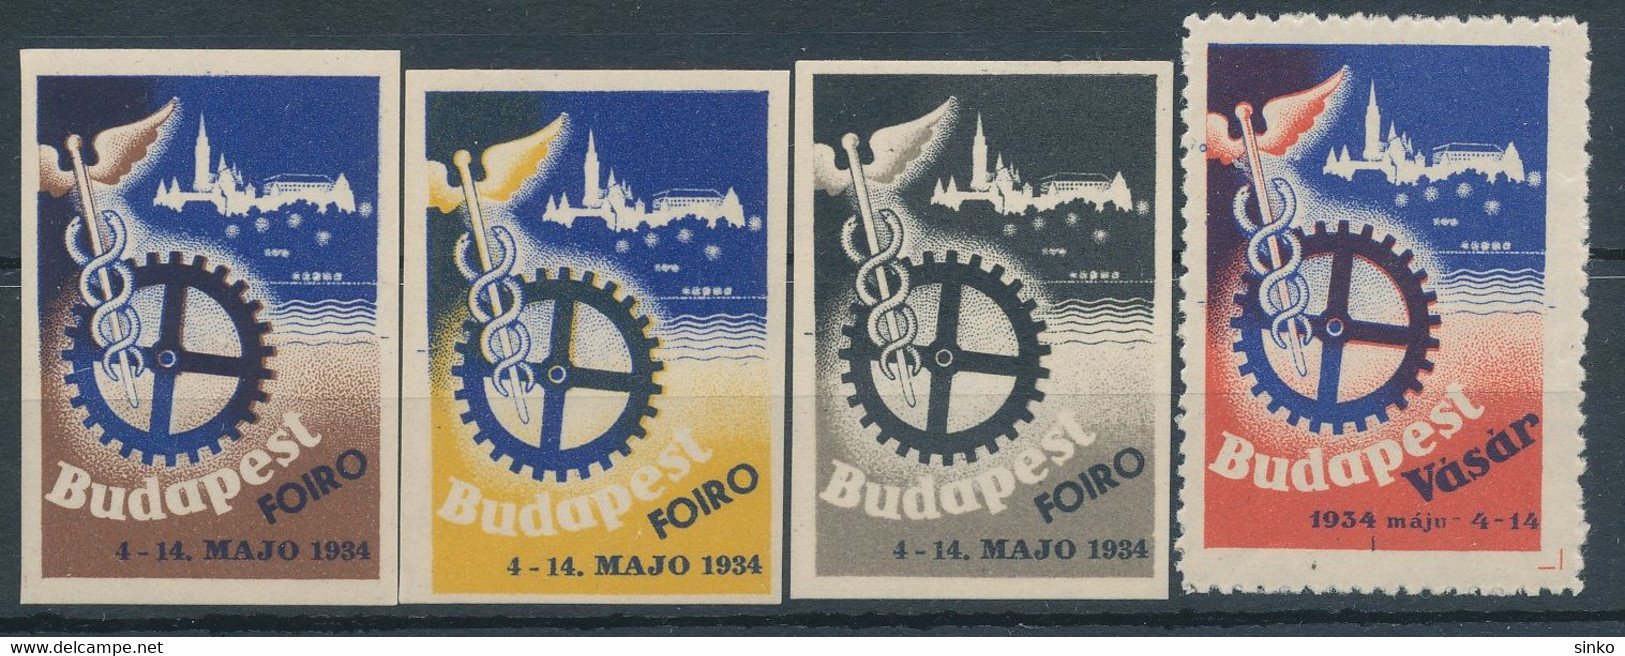 1934. Budapest Fair! - Herdenkingsblaadjes